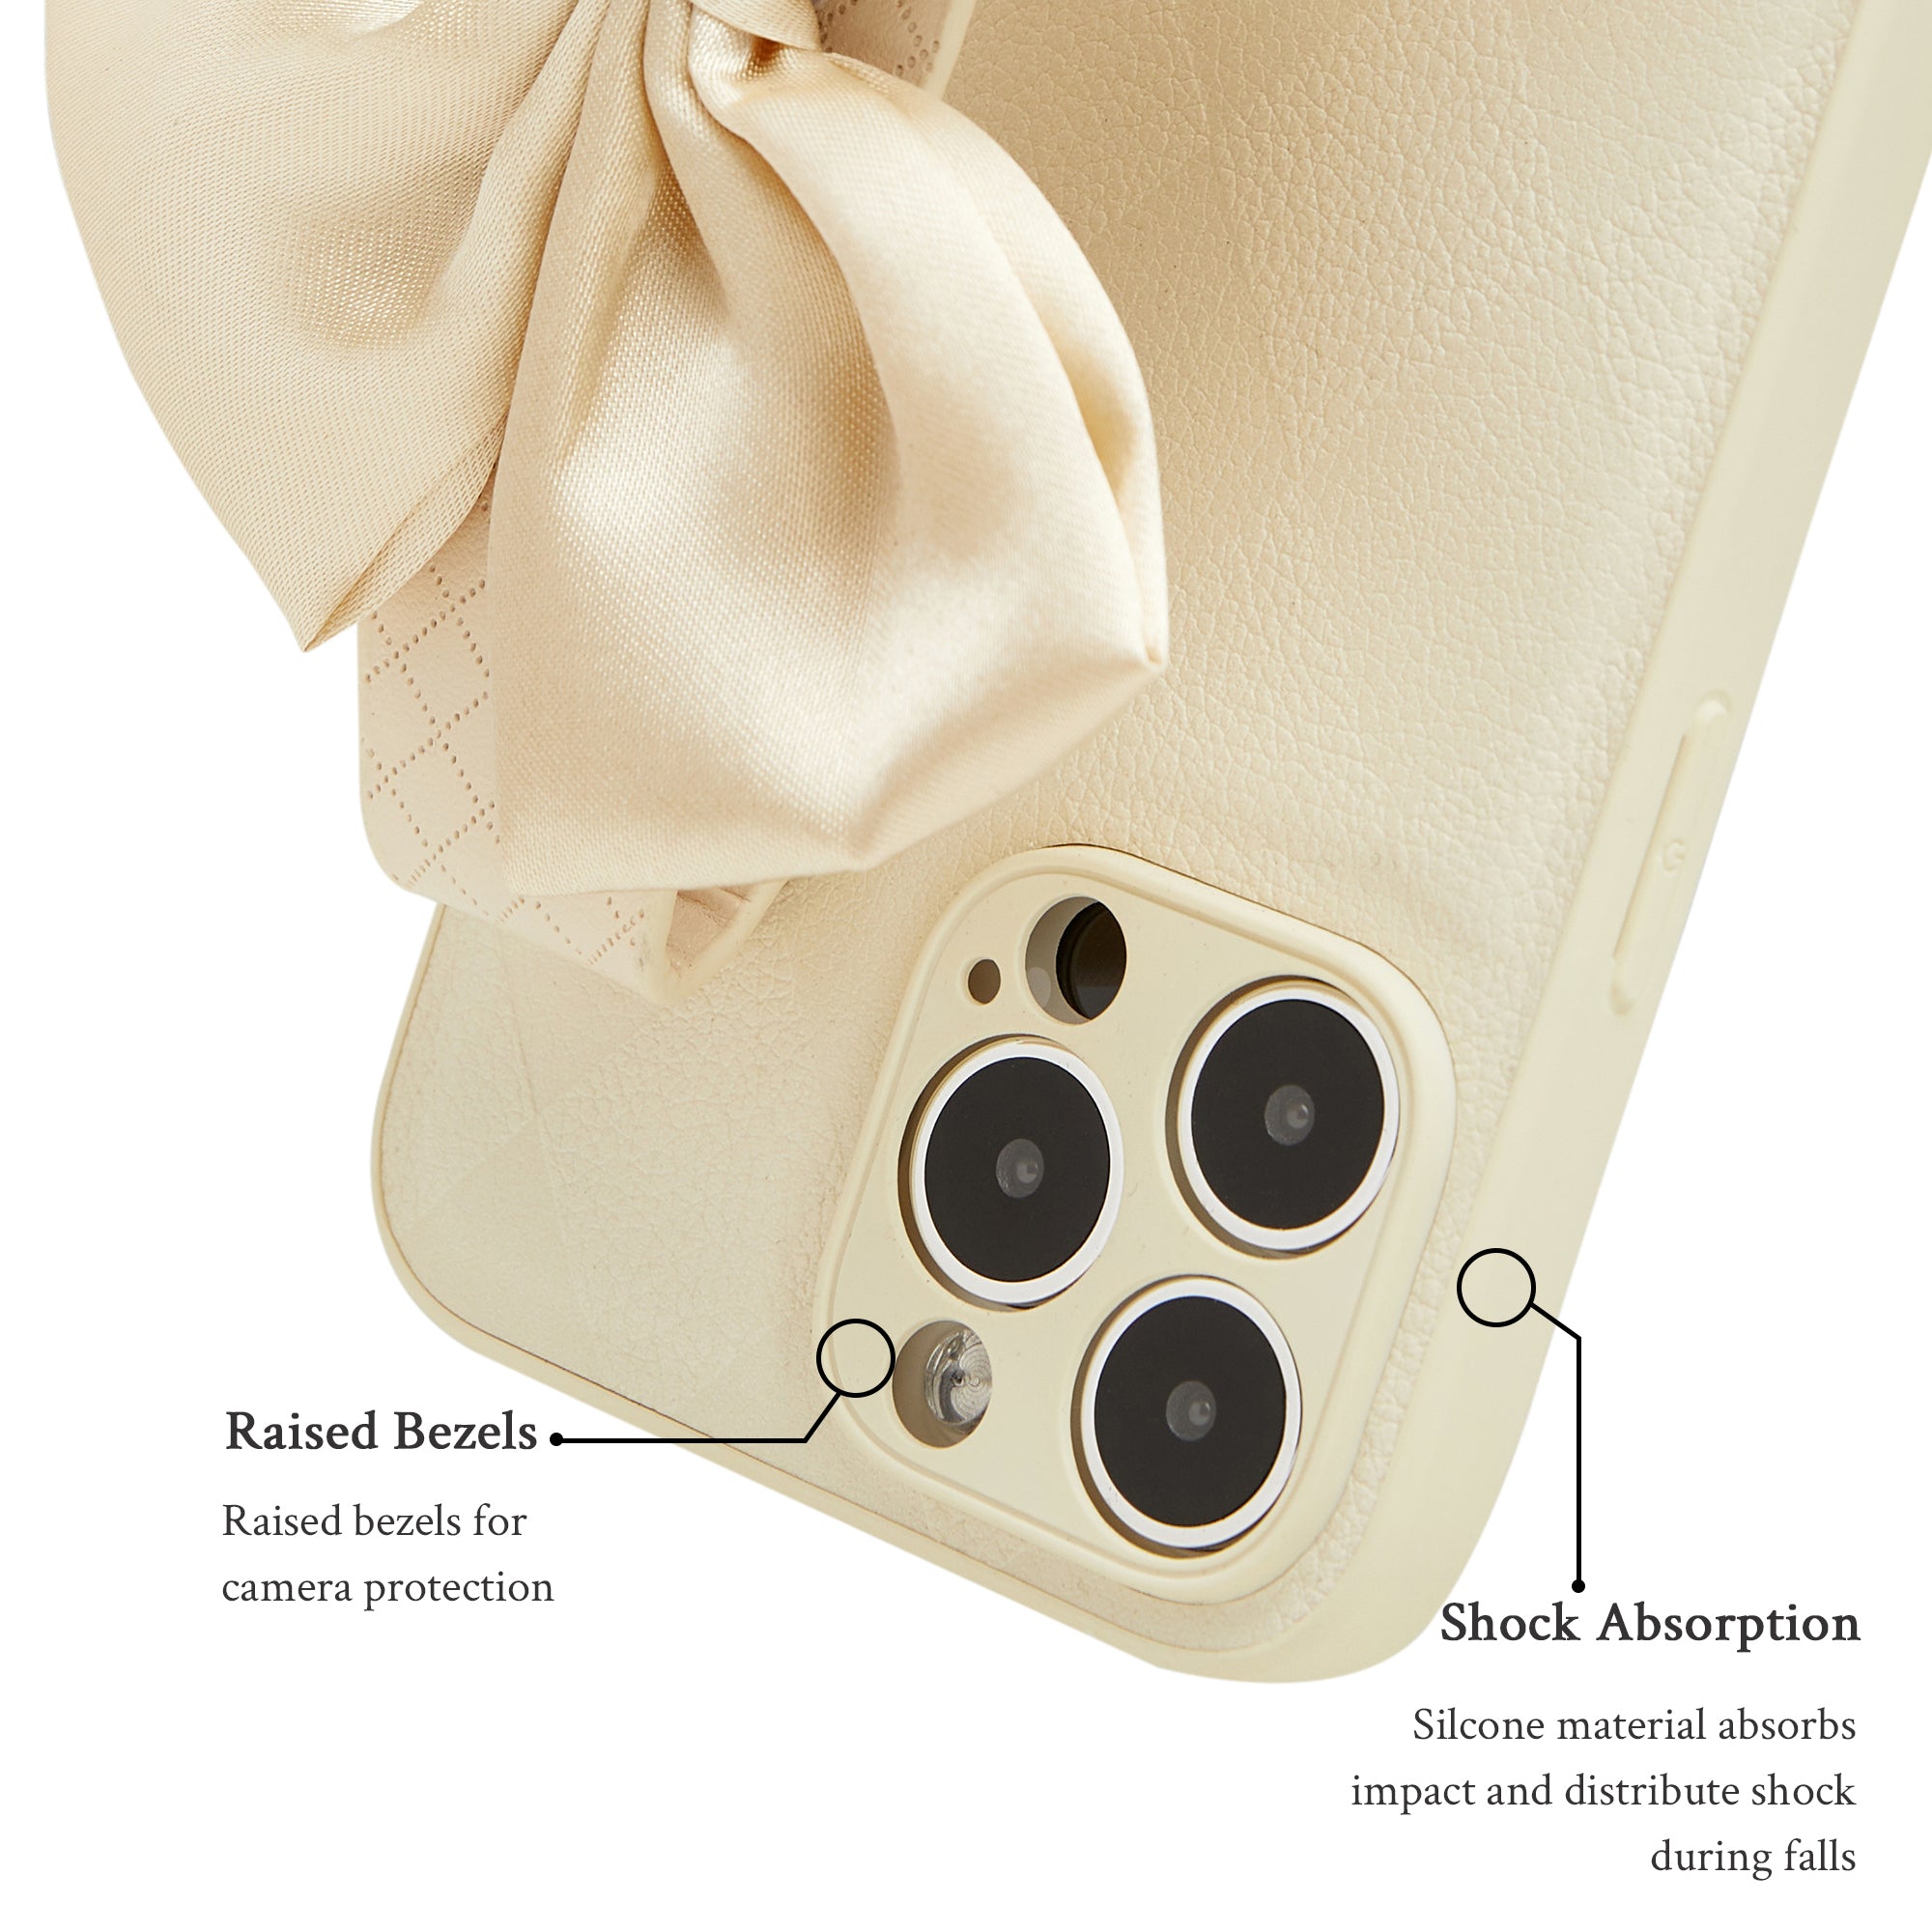 Cross-body Bowknot Wristlet Phone Case